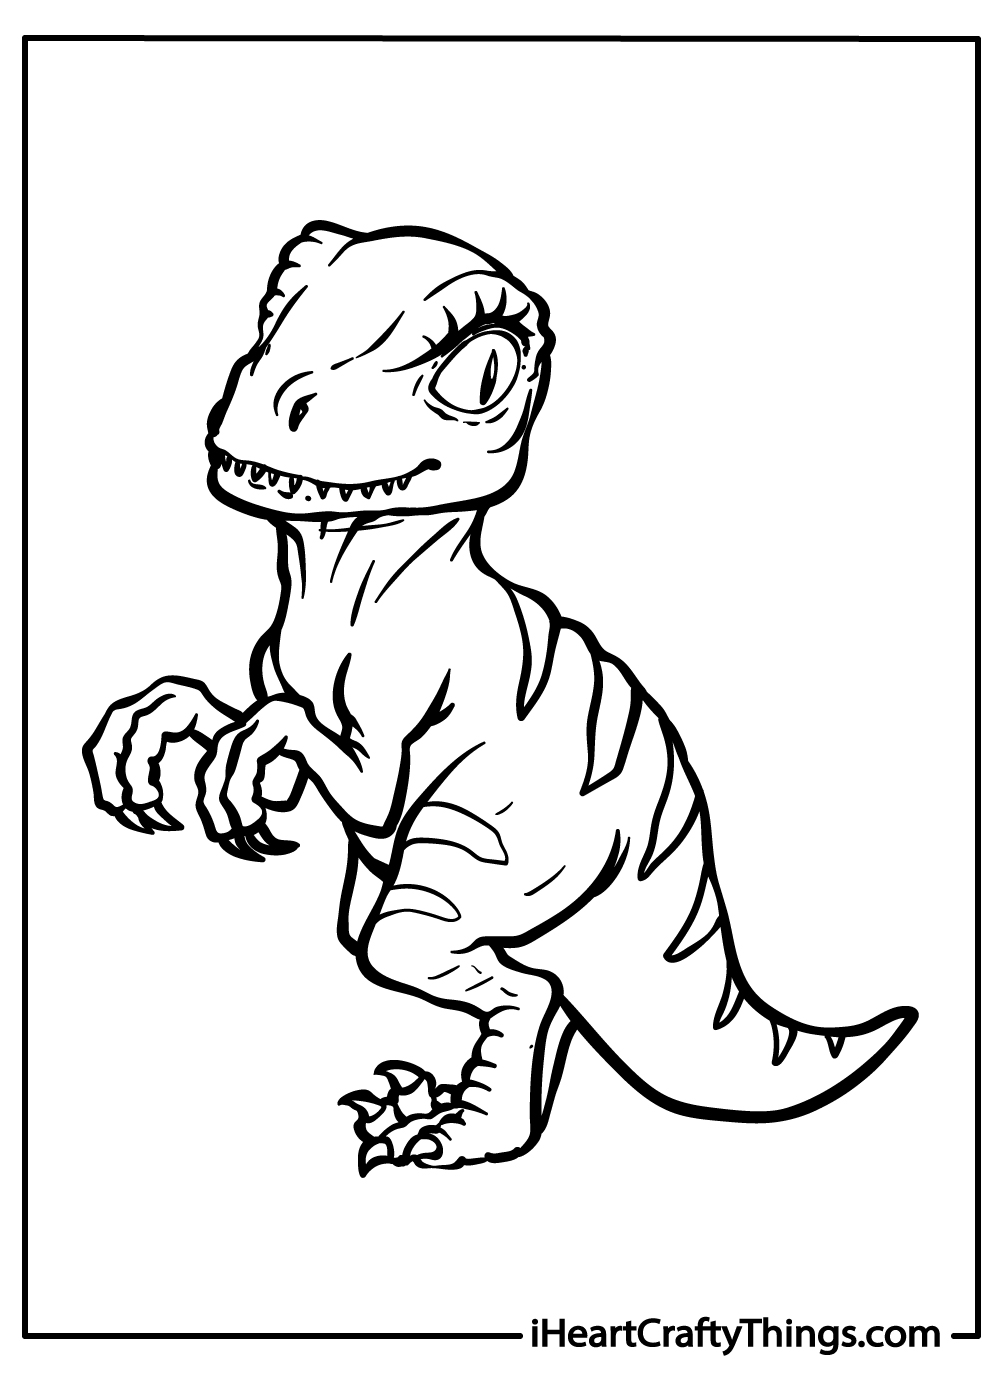 Velociraptor Coloring pdf sheets for kids